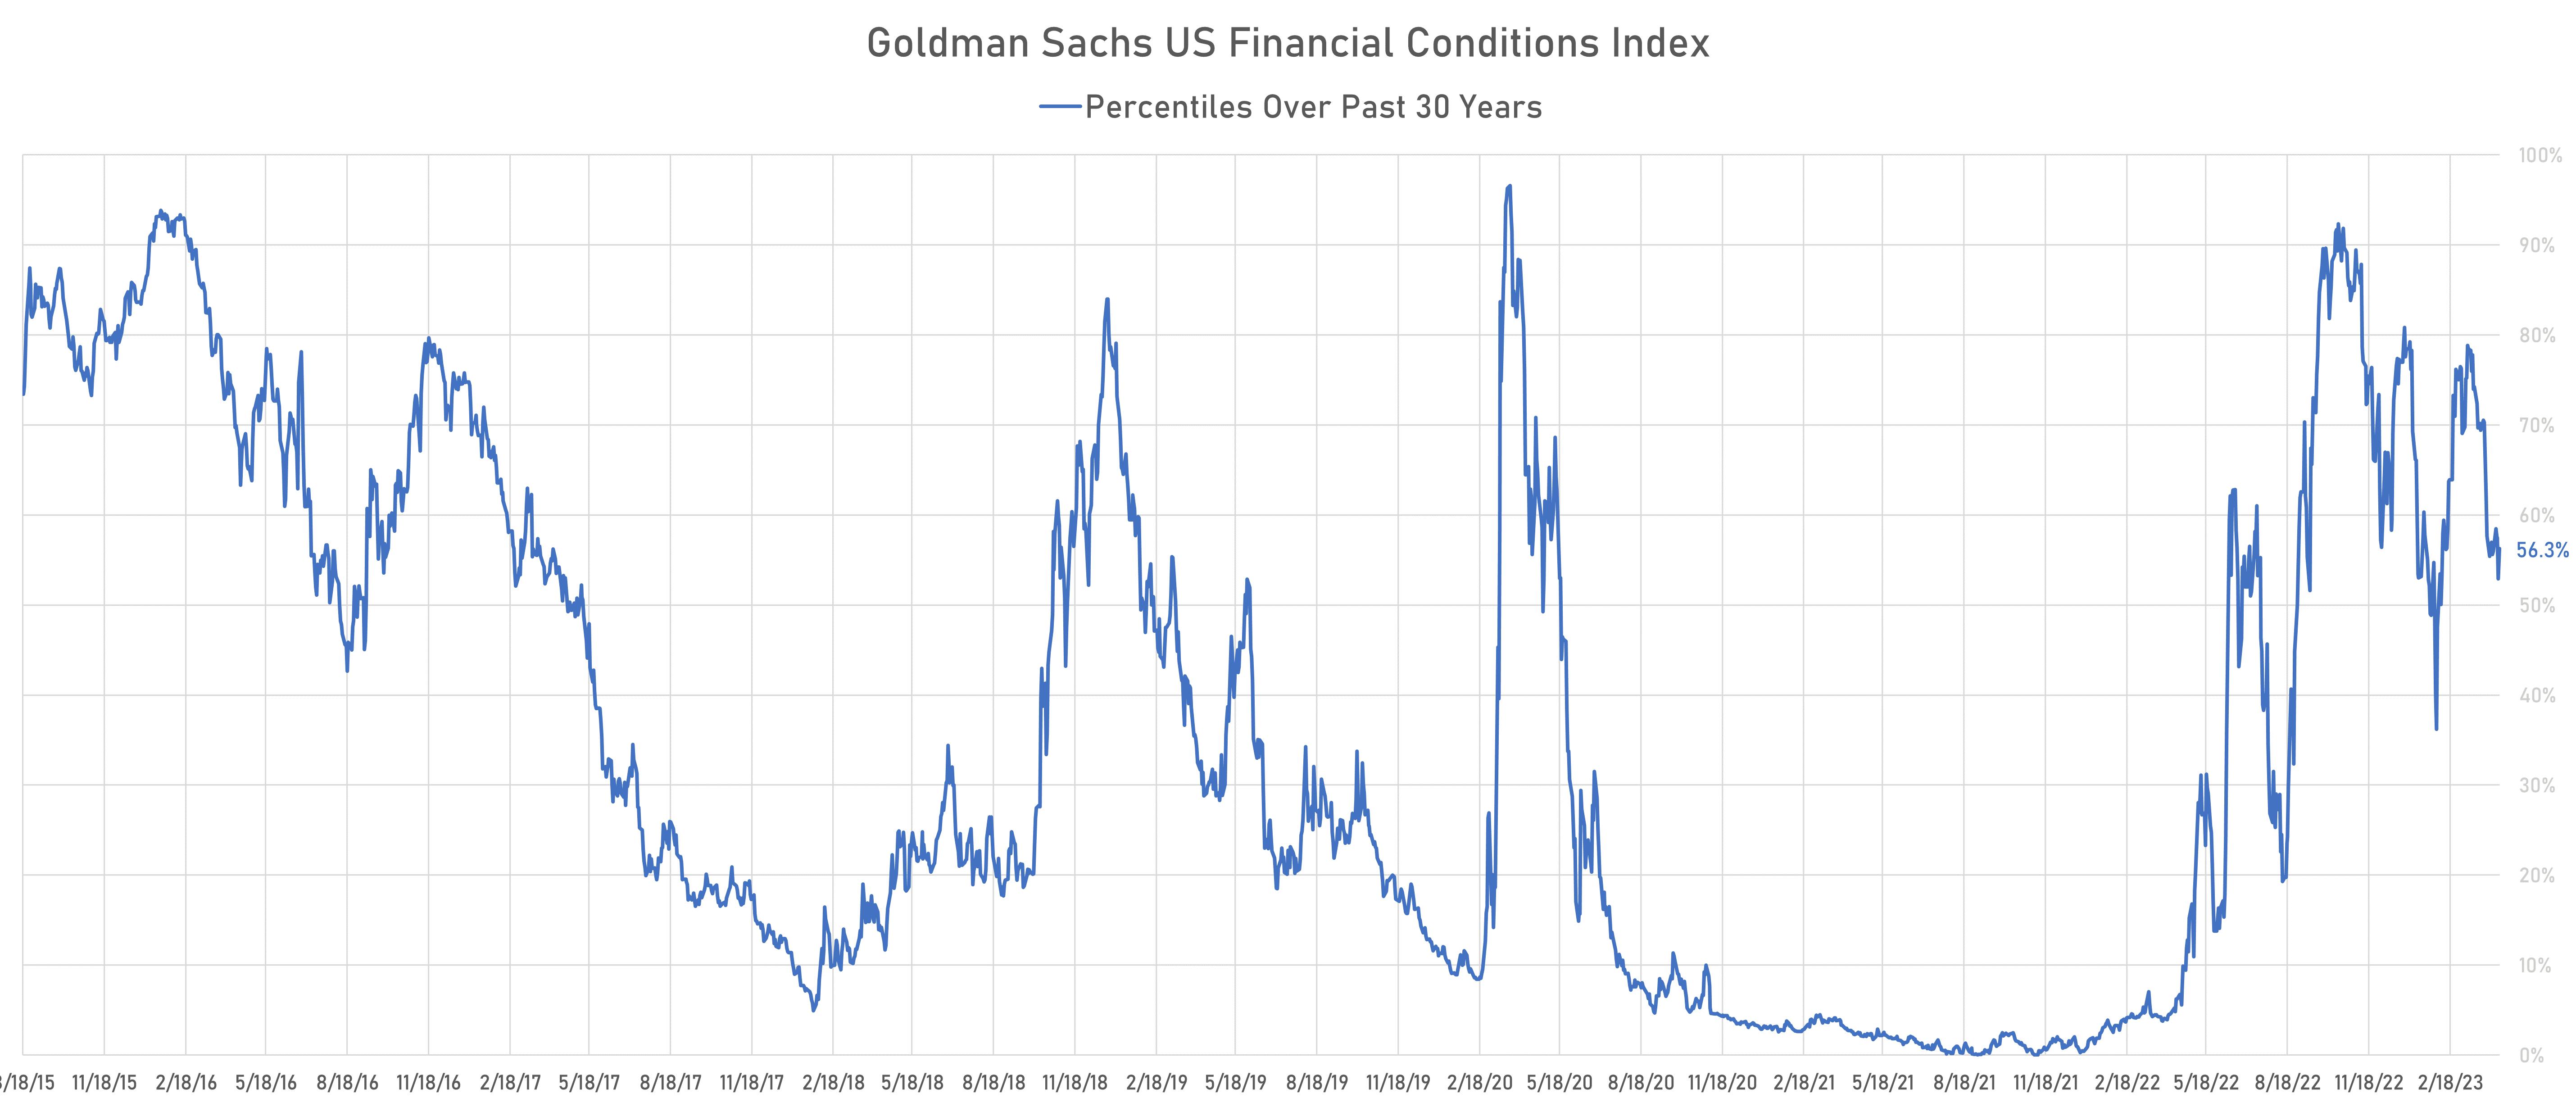 GS US FCI | Source: Goldman Sachs